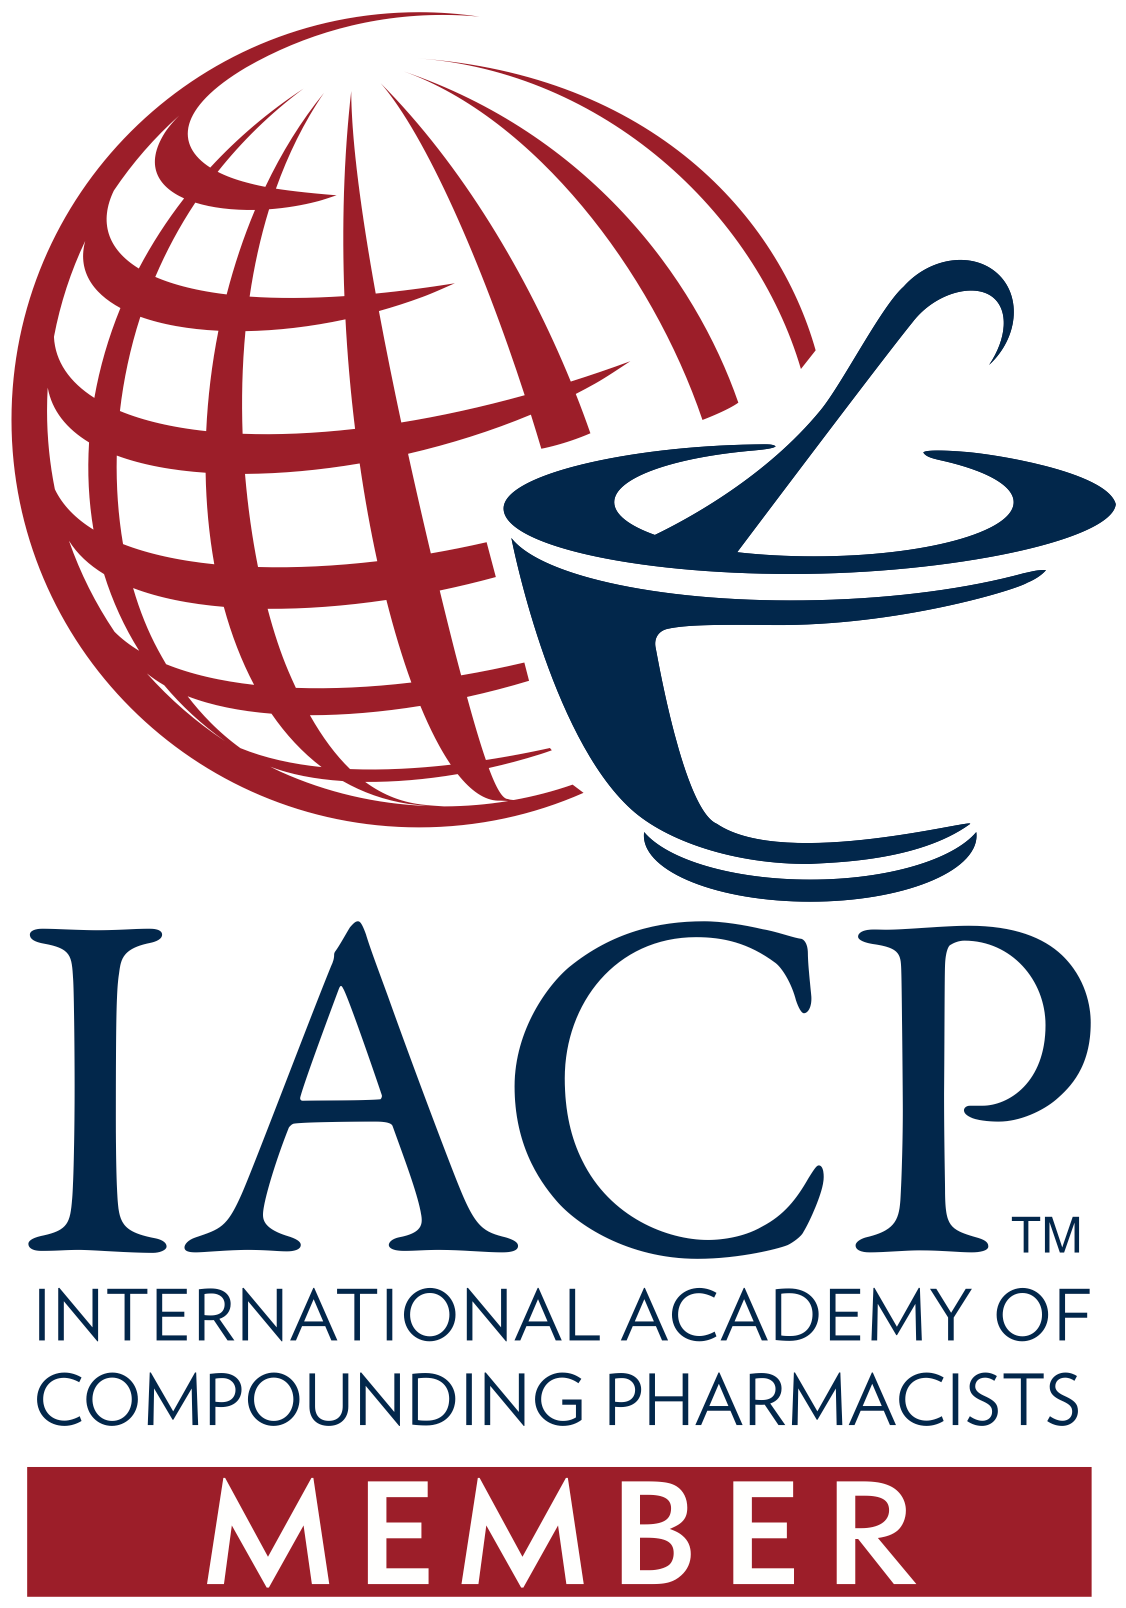 IACP Member Logo CMYK